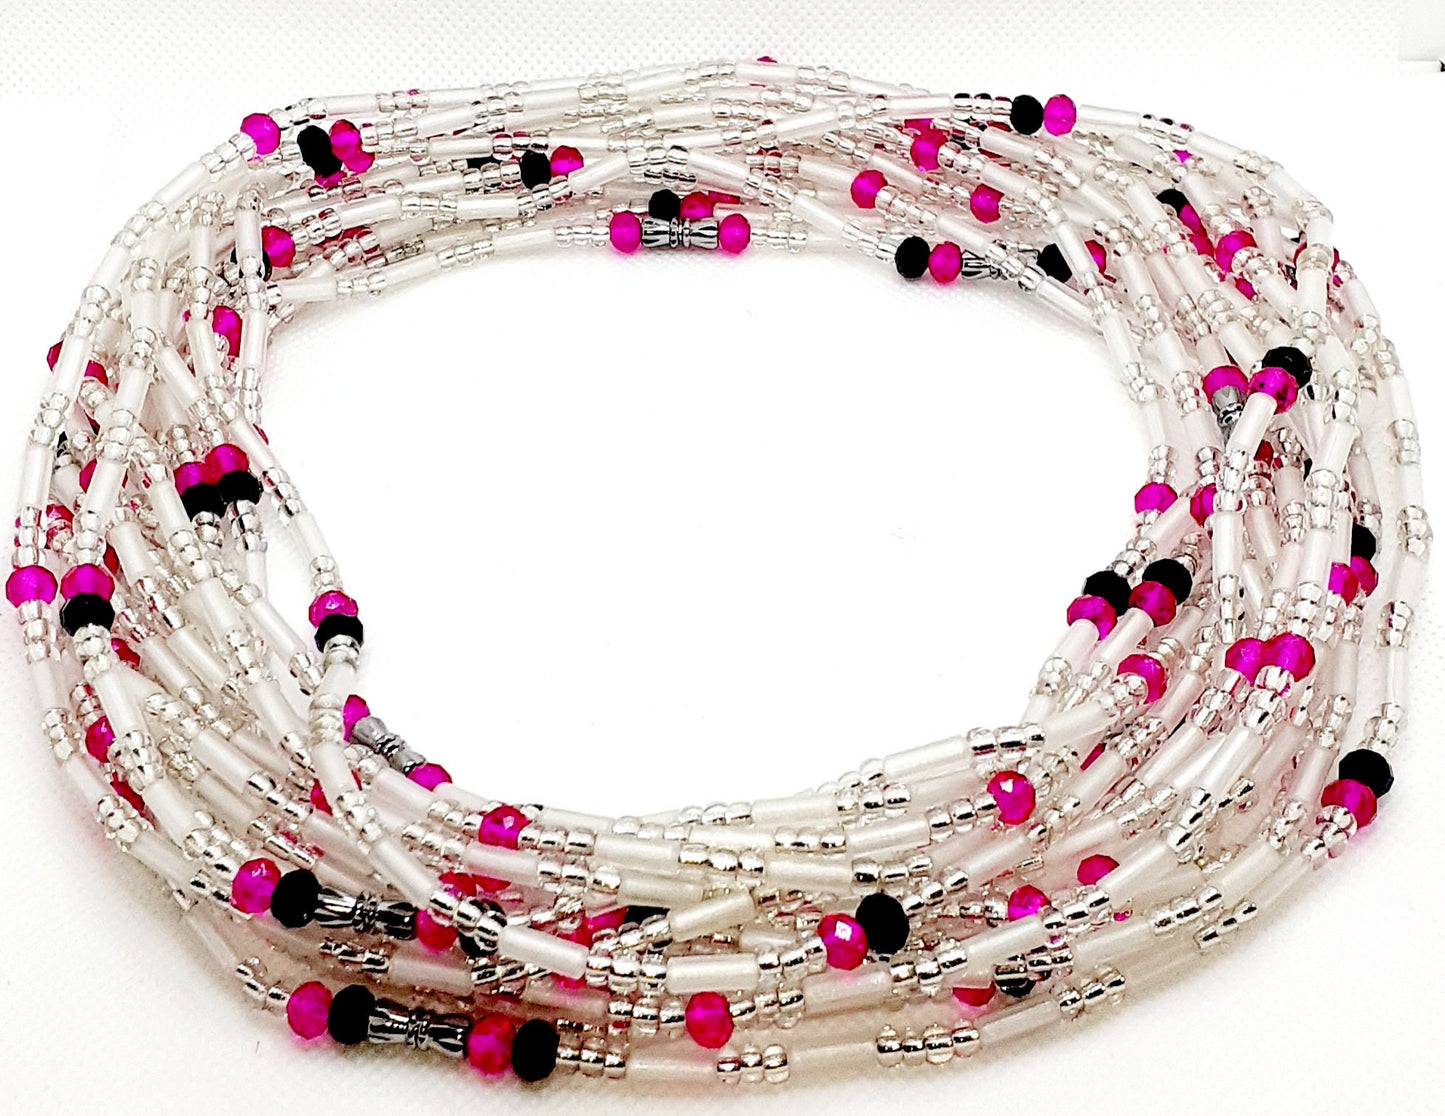 Waist Bead|Belly Chain|weight loss beads|Weight control beads|African Waist bead|Multi coloured African waist Bead Glow in the Dark